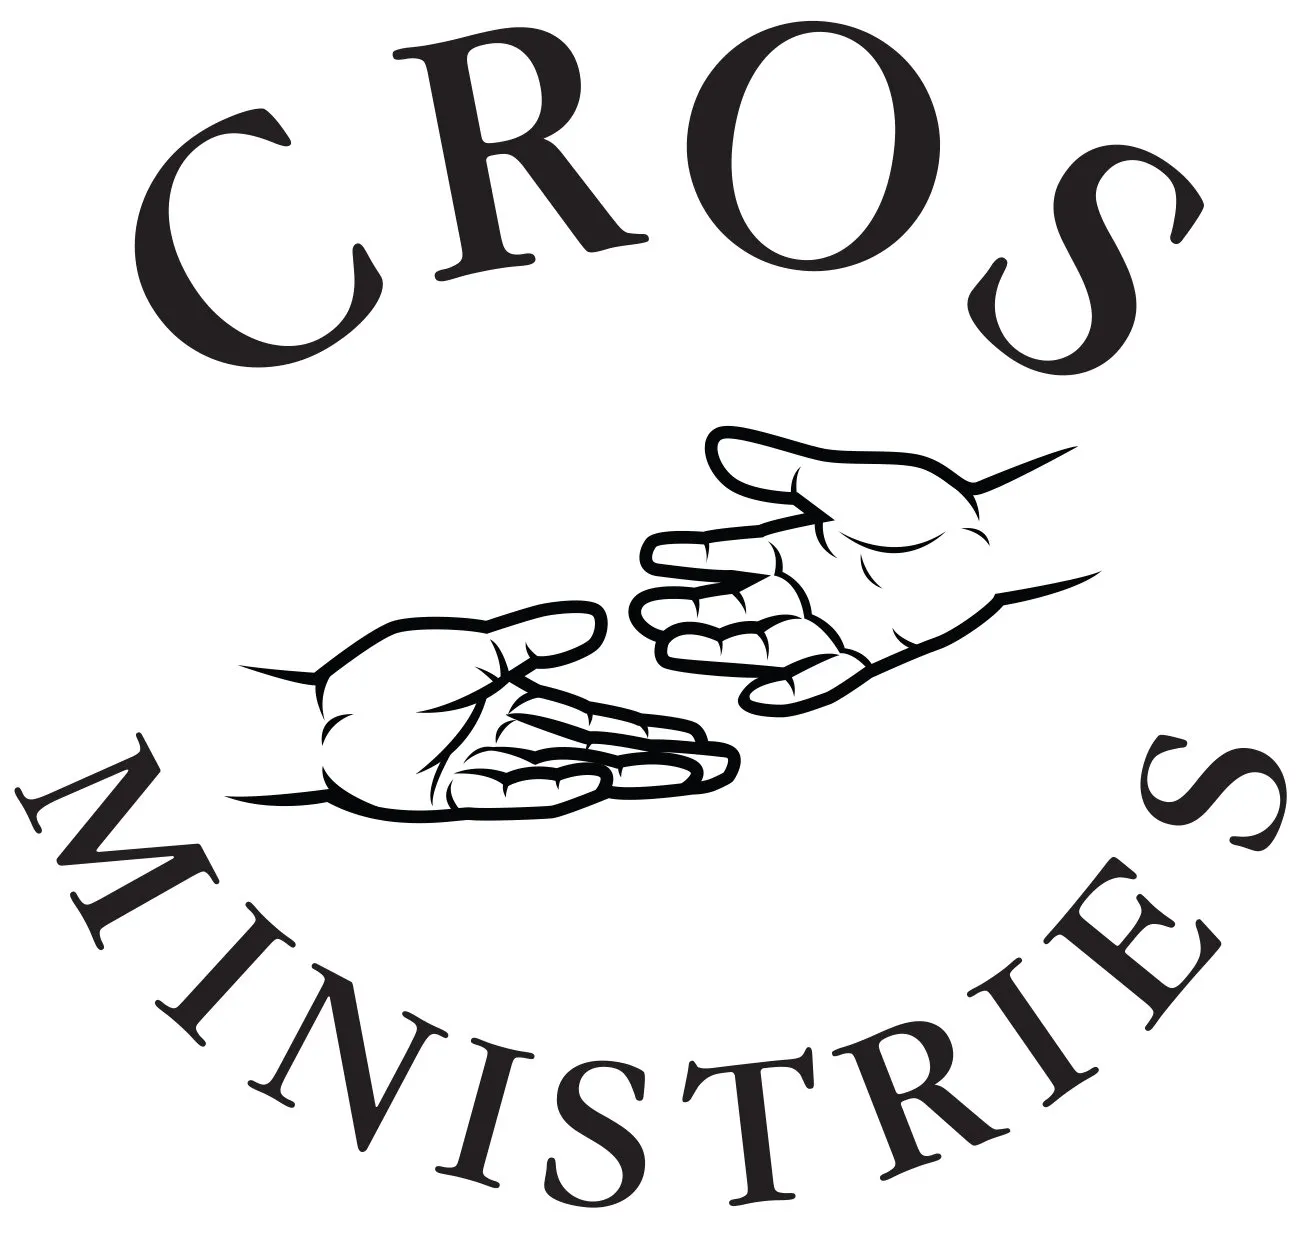 CROS Ministries